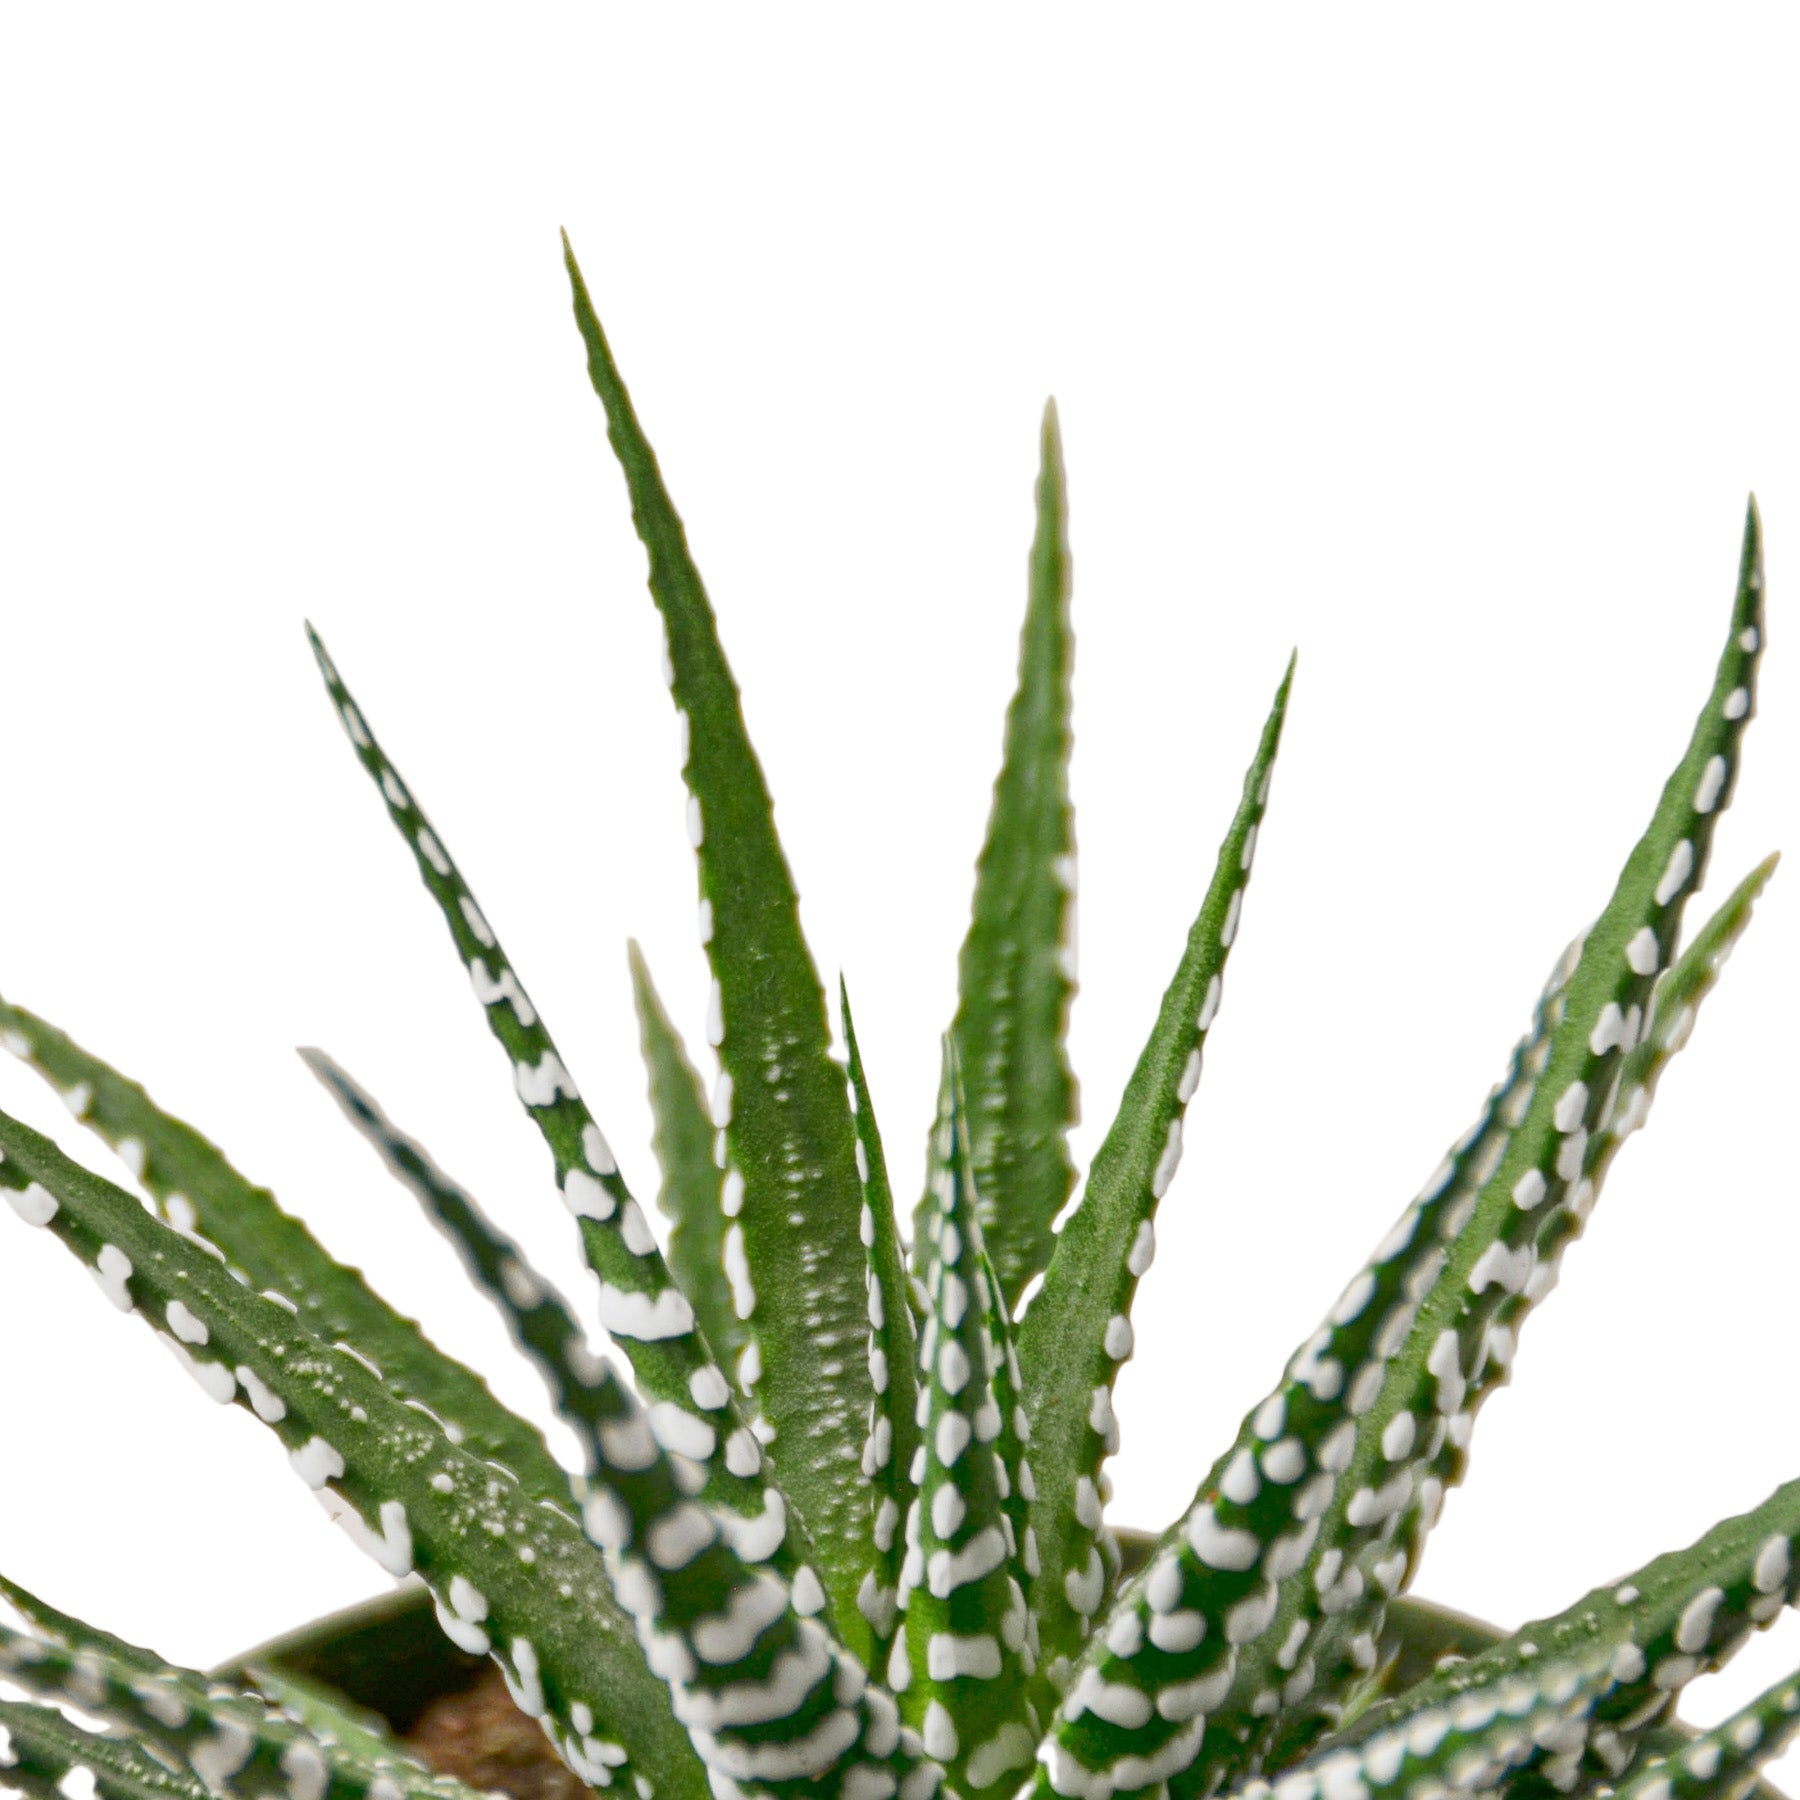 Aloe vera plant in a pot on a white background showcasing the best garden nursery near me.